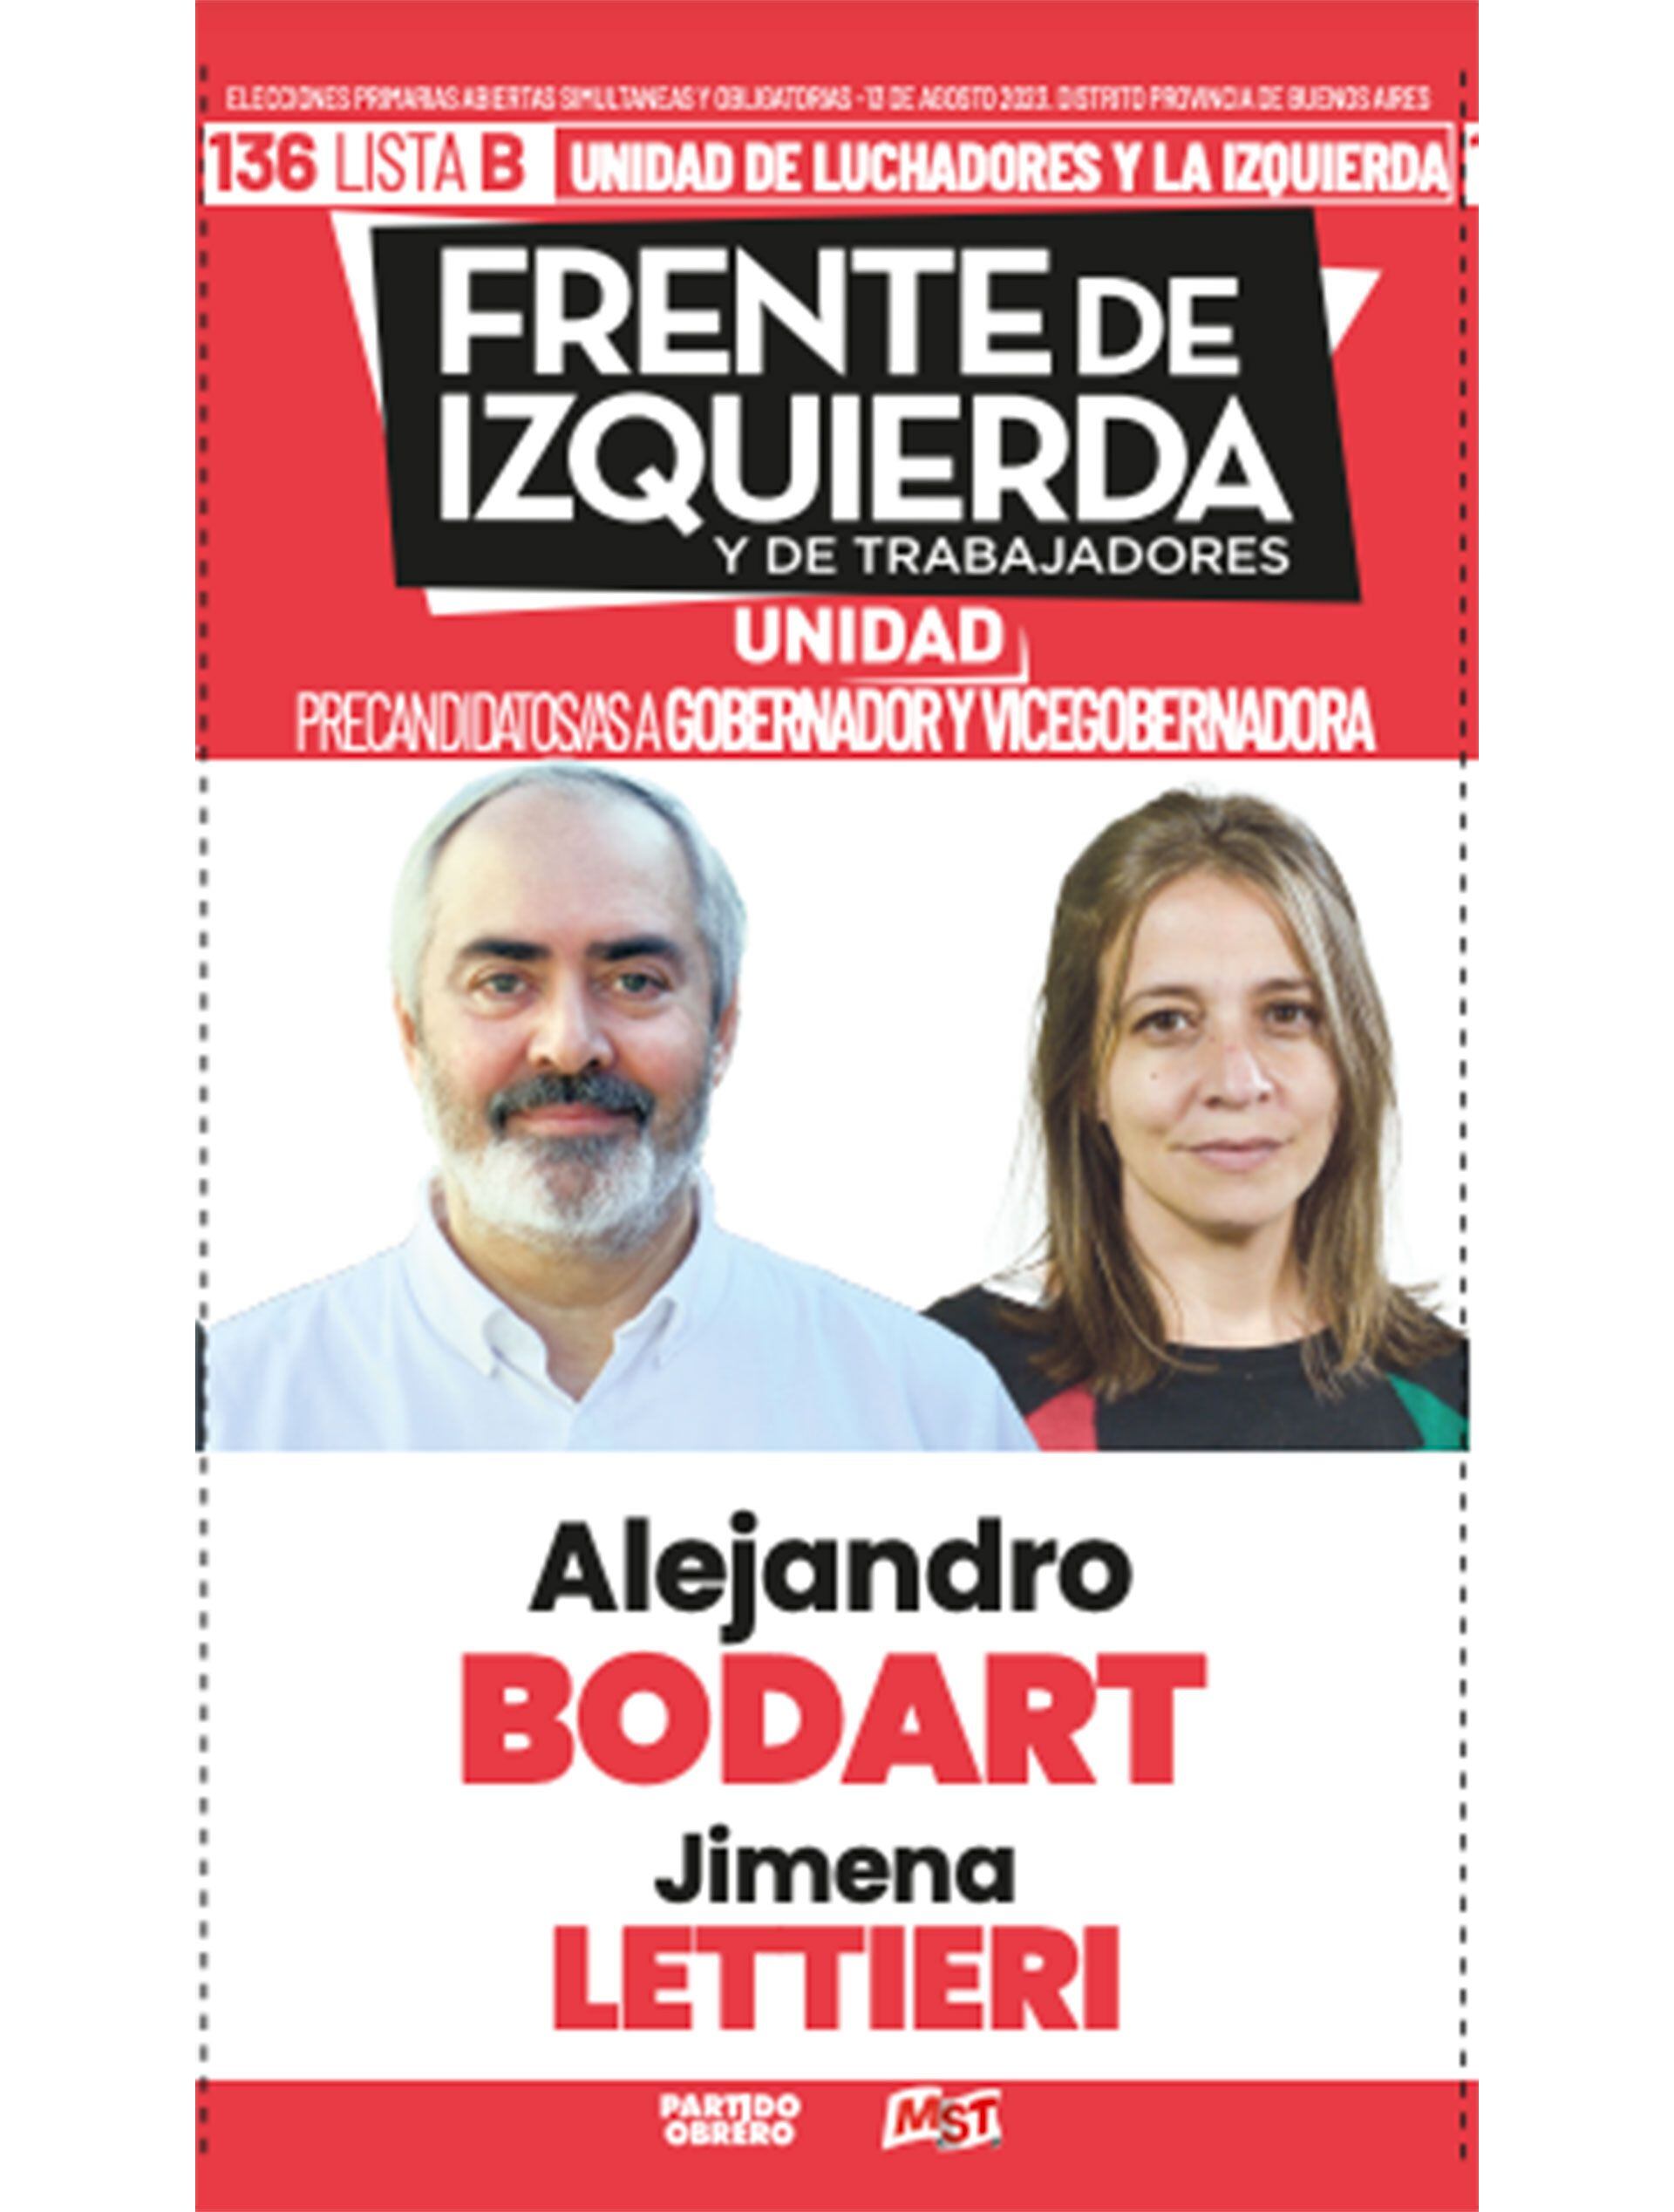 "PASO 2023 Boleta FIT - Alejandro Bodart gobernador"